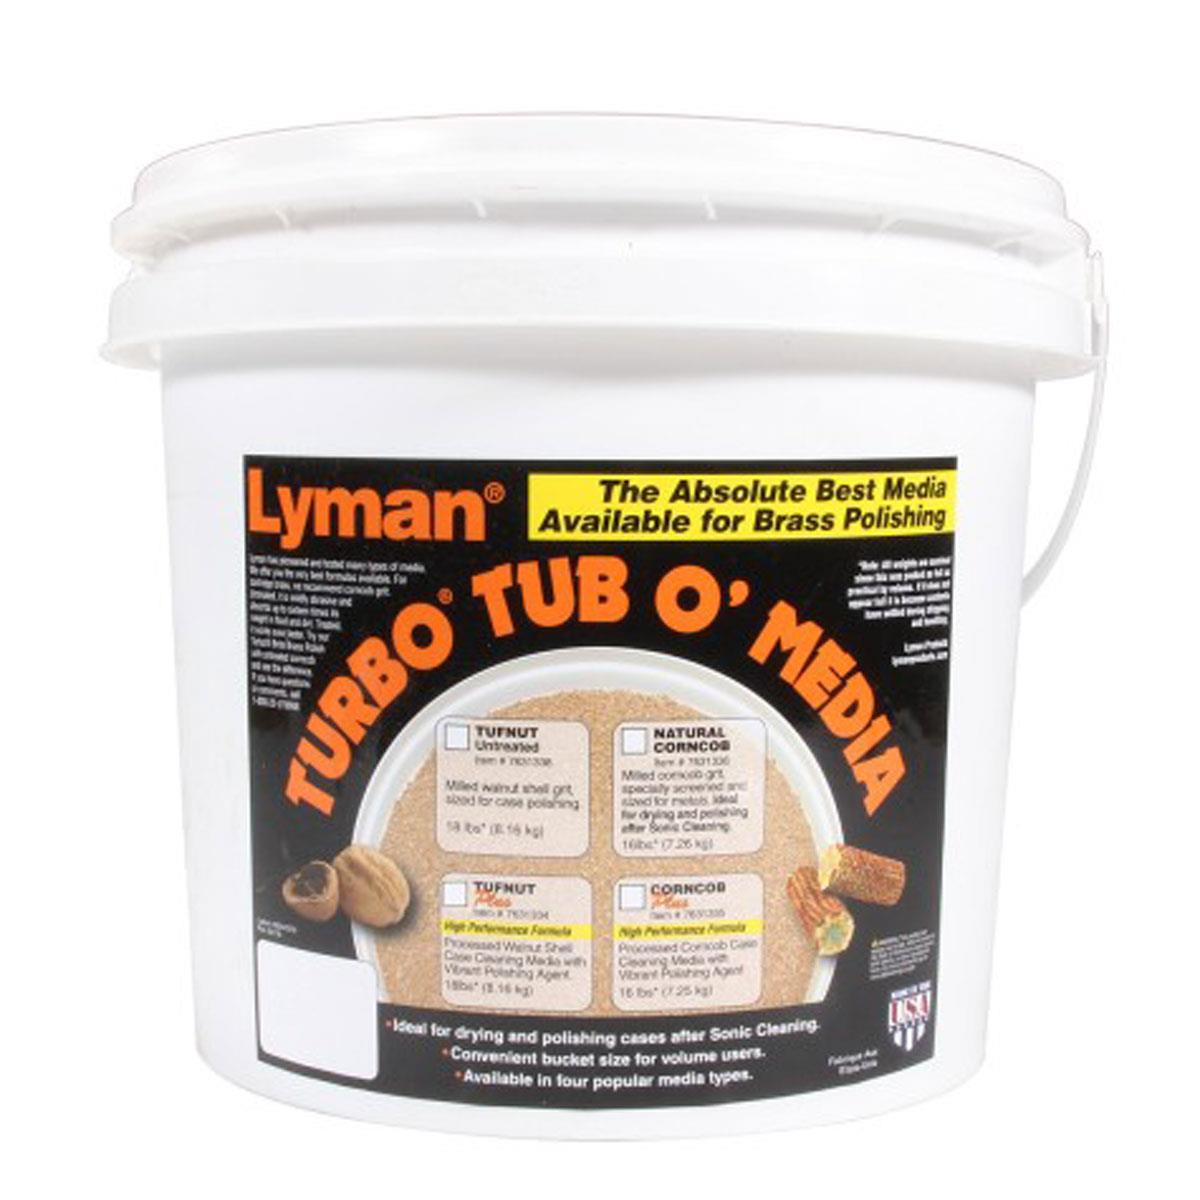 Image of Lyman 18lbs Turbo Tub O'Media Tufnut Case Cleaning Media